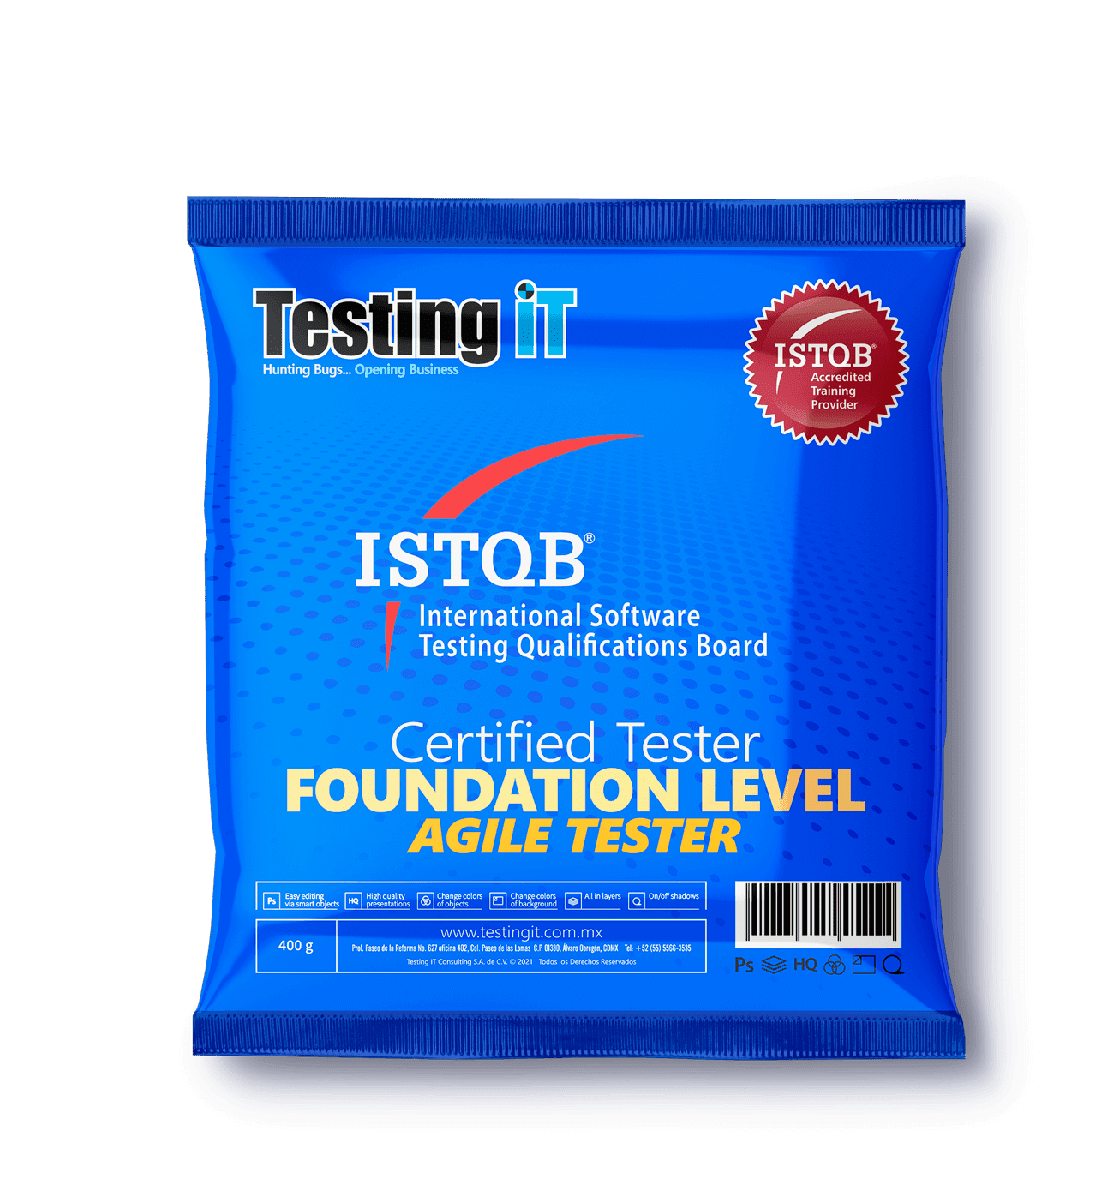 01_Bolsita-ISTQB-Certified-Tester-Foundation-Level-Agile-Tester